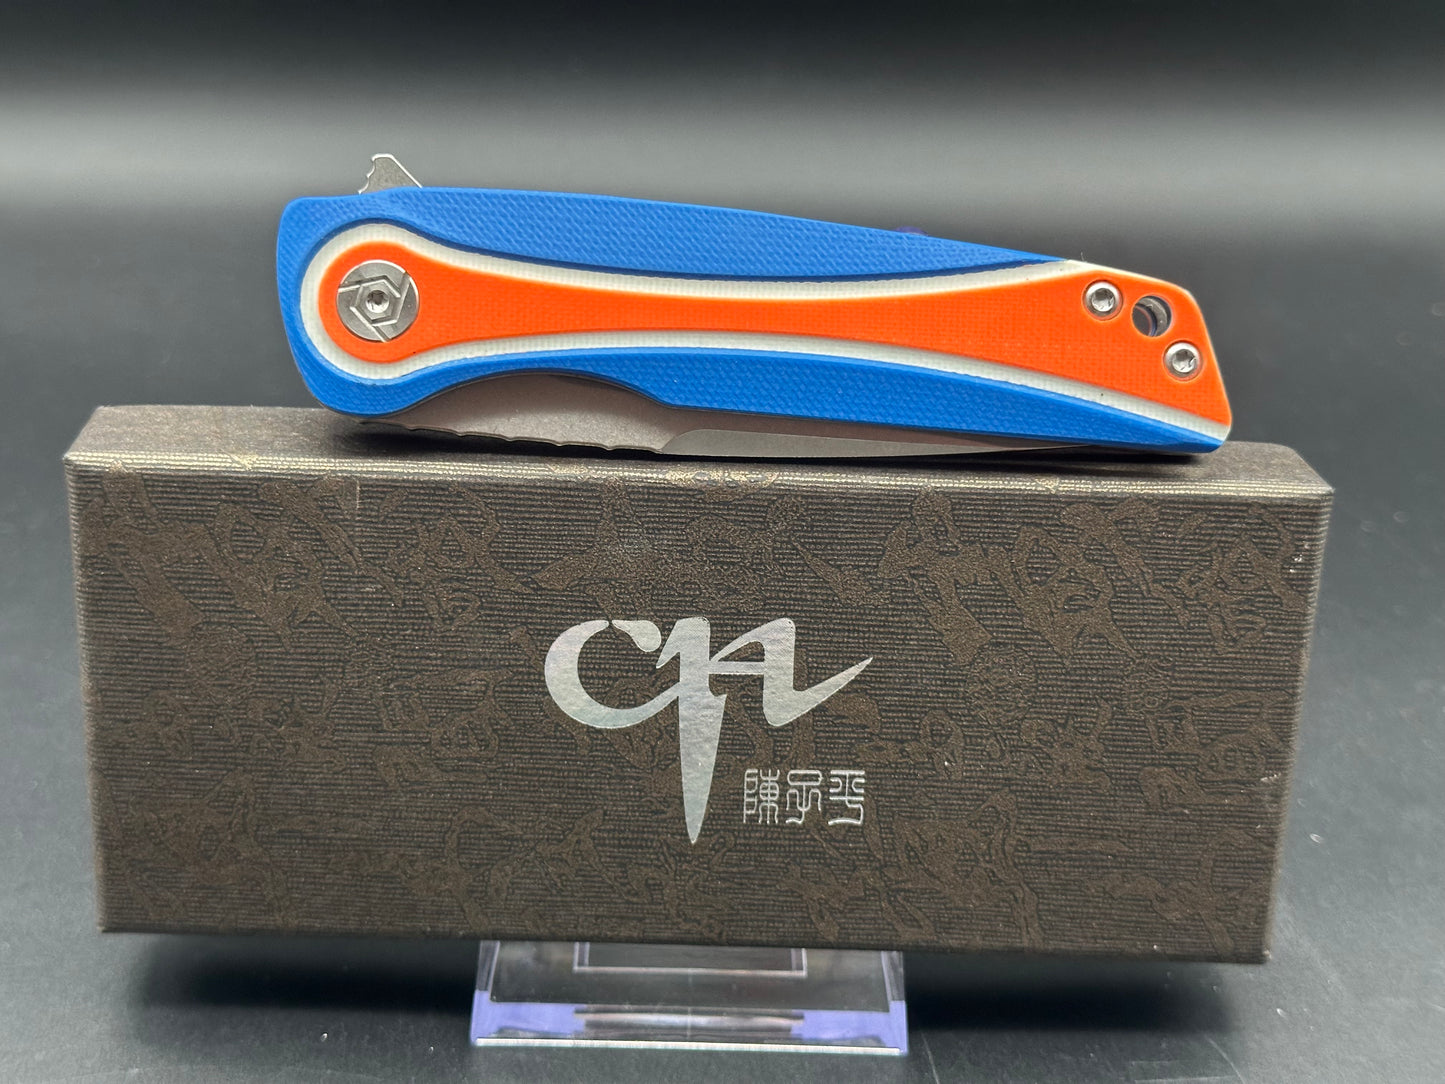 CH KNIVES CH3511-BL-OR G10 FOLDER KNIFE BLUE & ORANGE G10 HANDLE